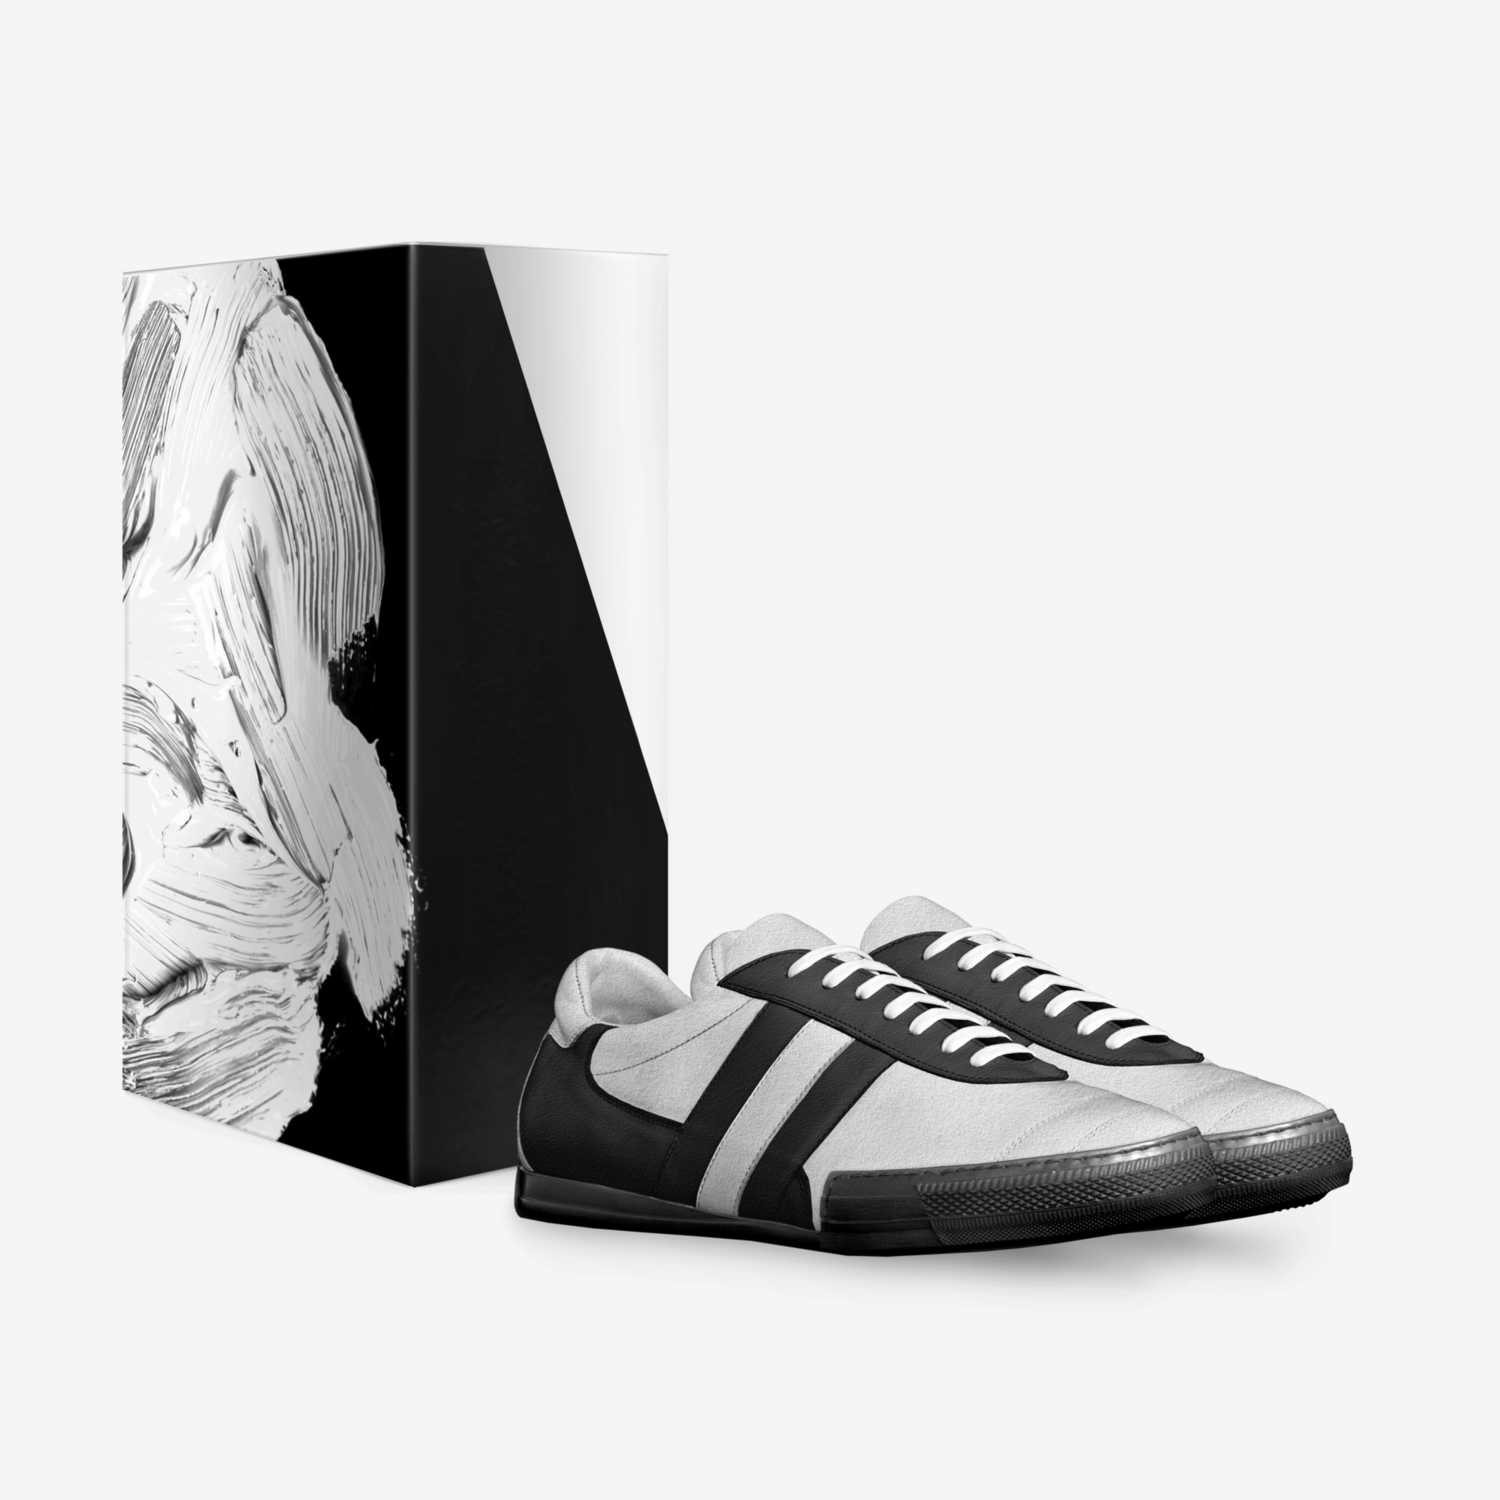 Kontrast Footwear custom made in Italy shoes by Joshua Halverson | Box view